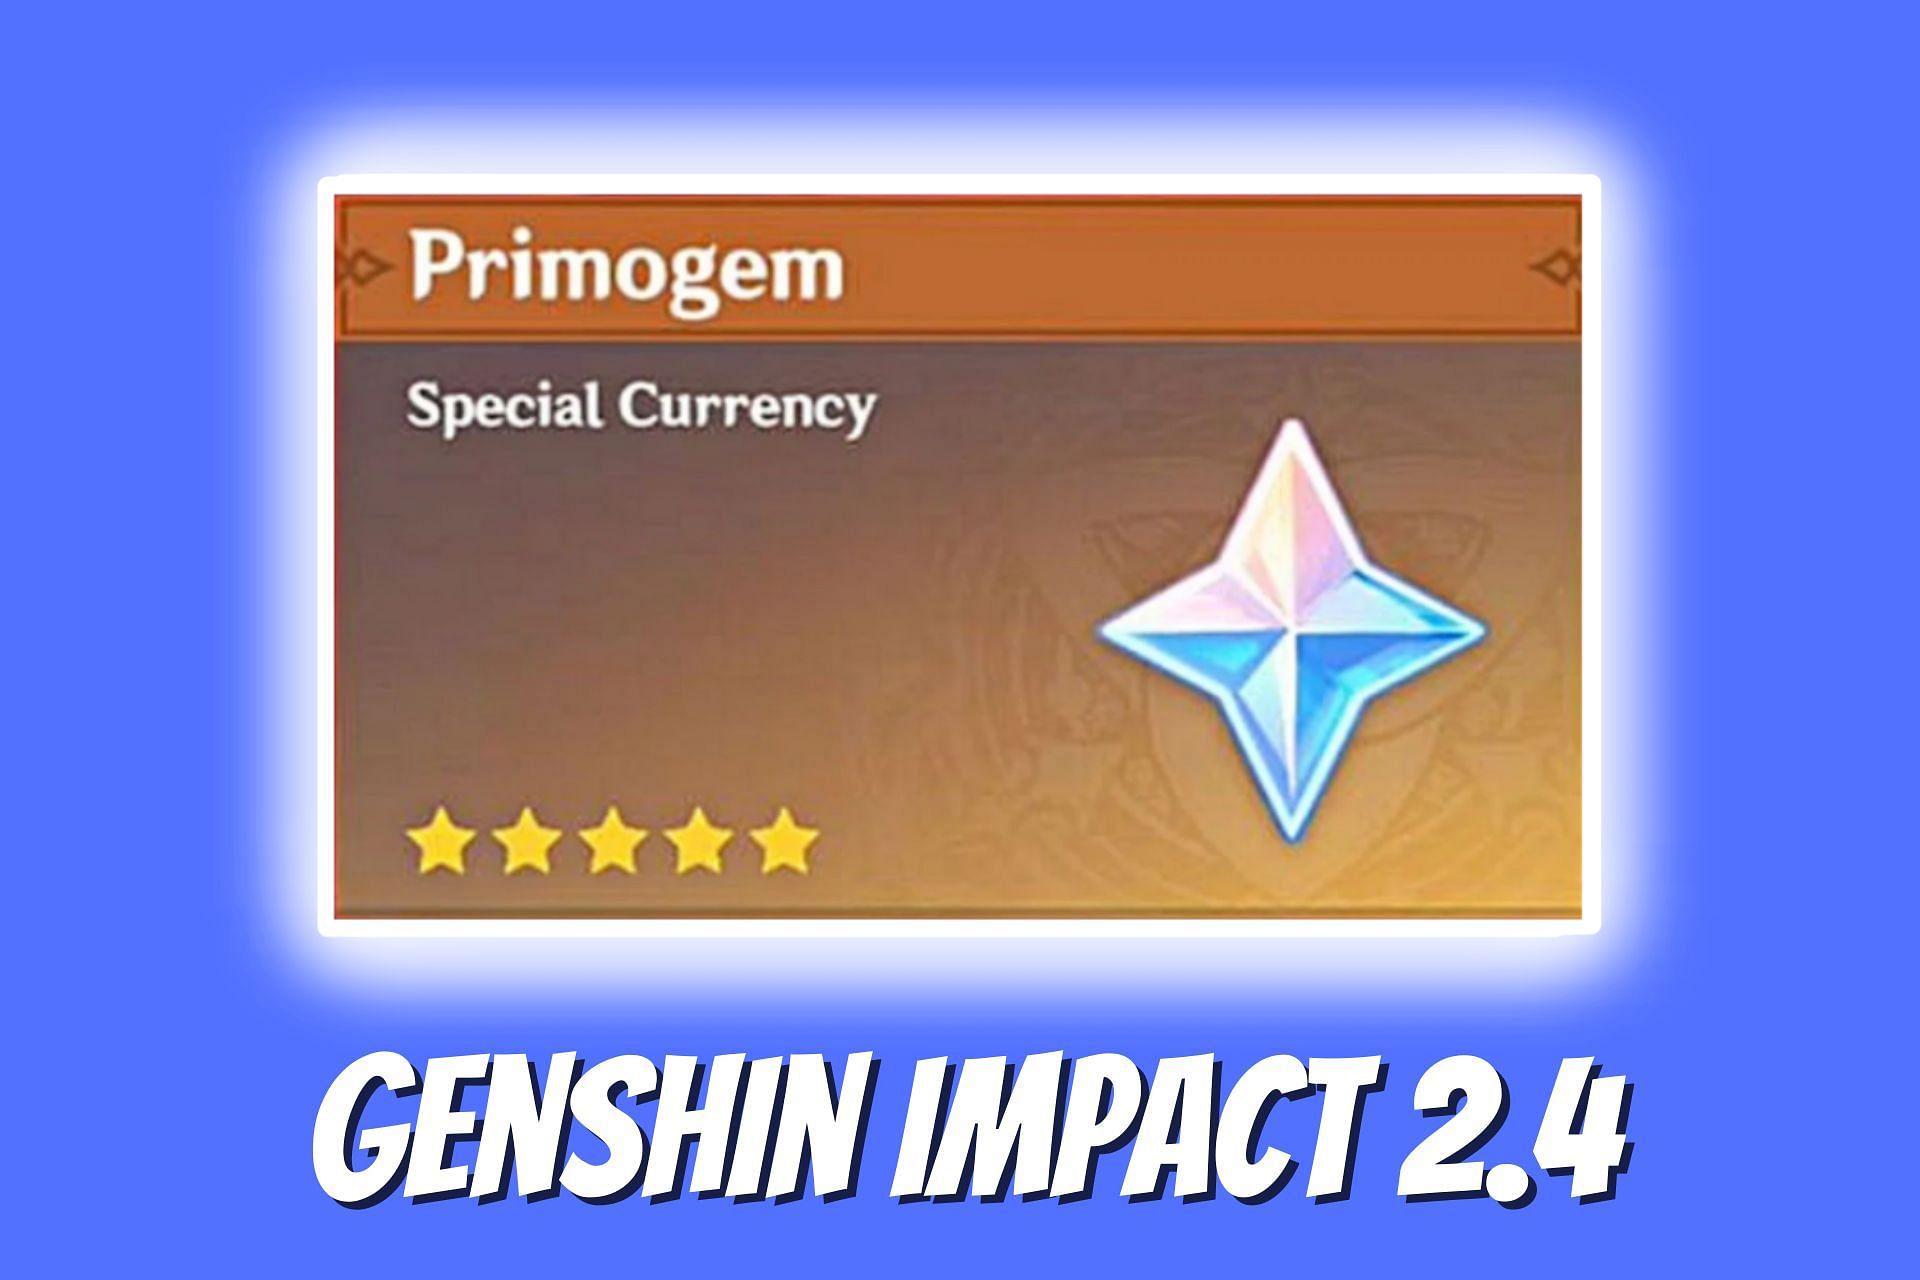 Genshin Impact 2.4 livestream dropped three redeem codes that grant free Primogems (Image via Sportskeeda)